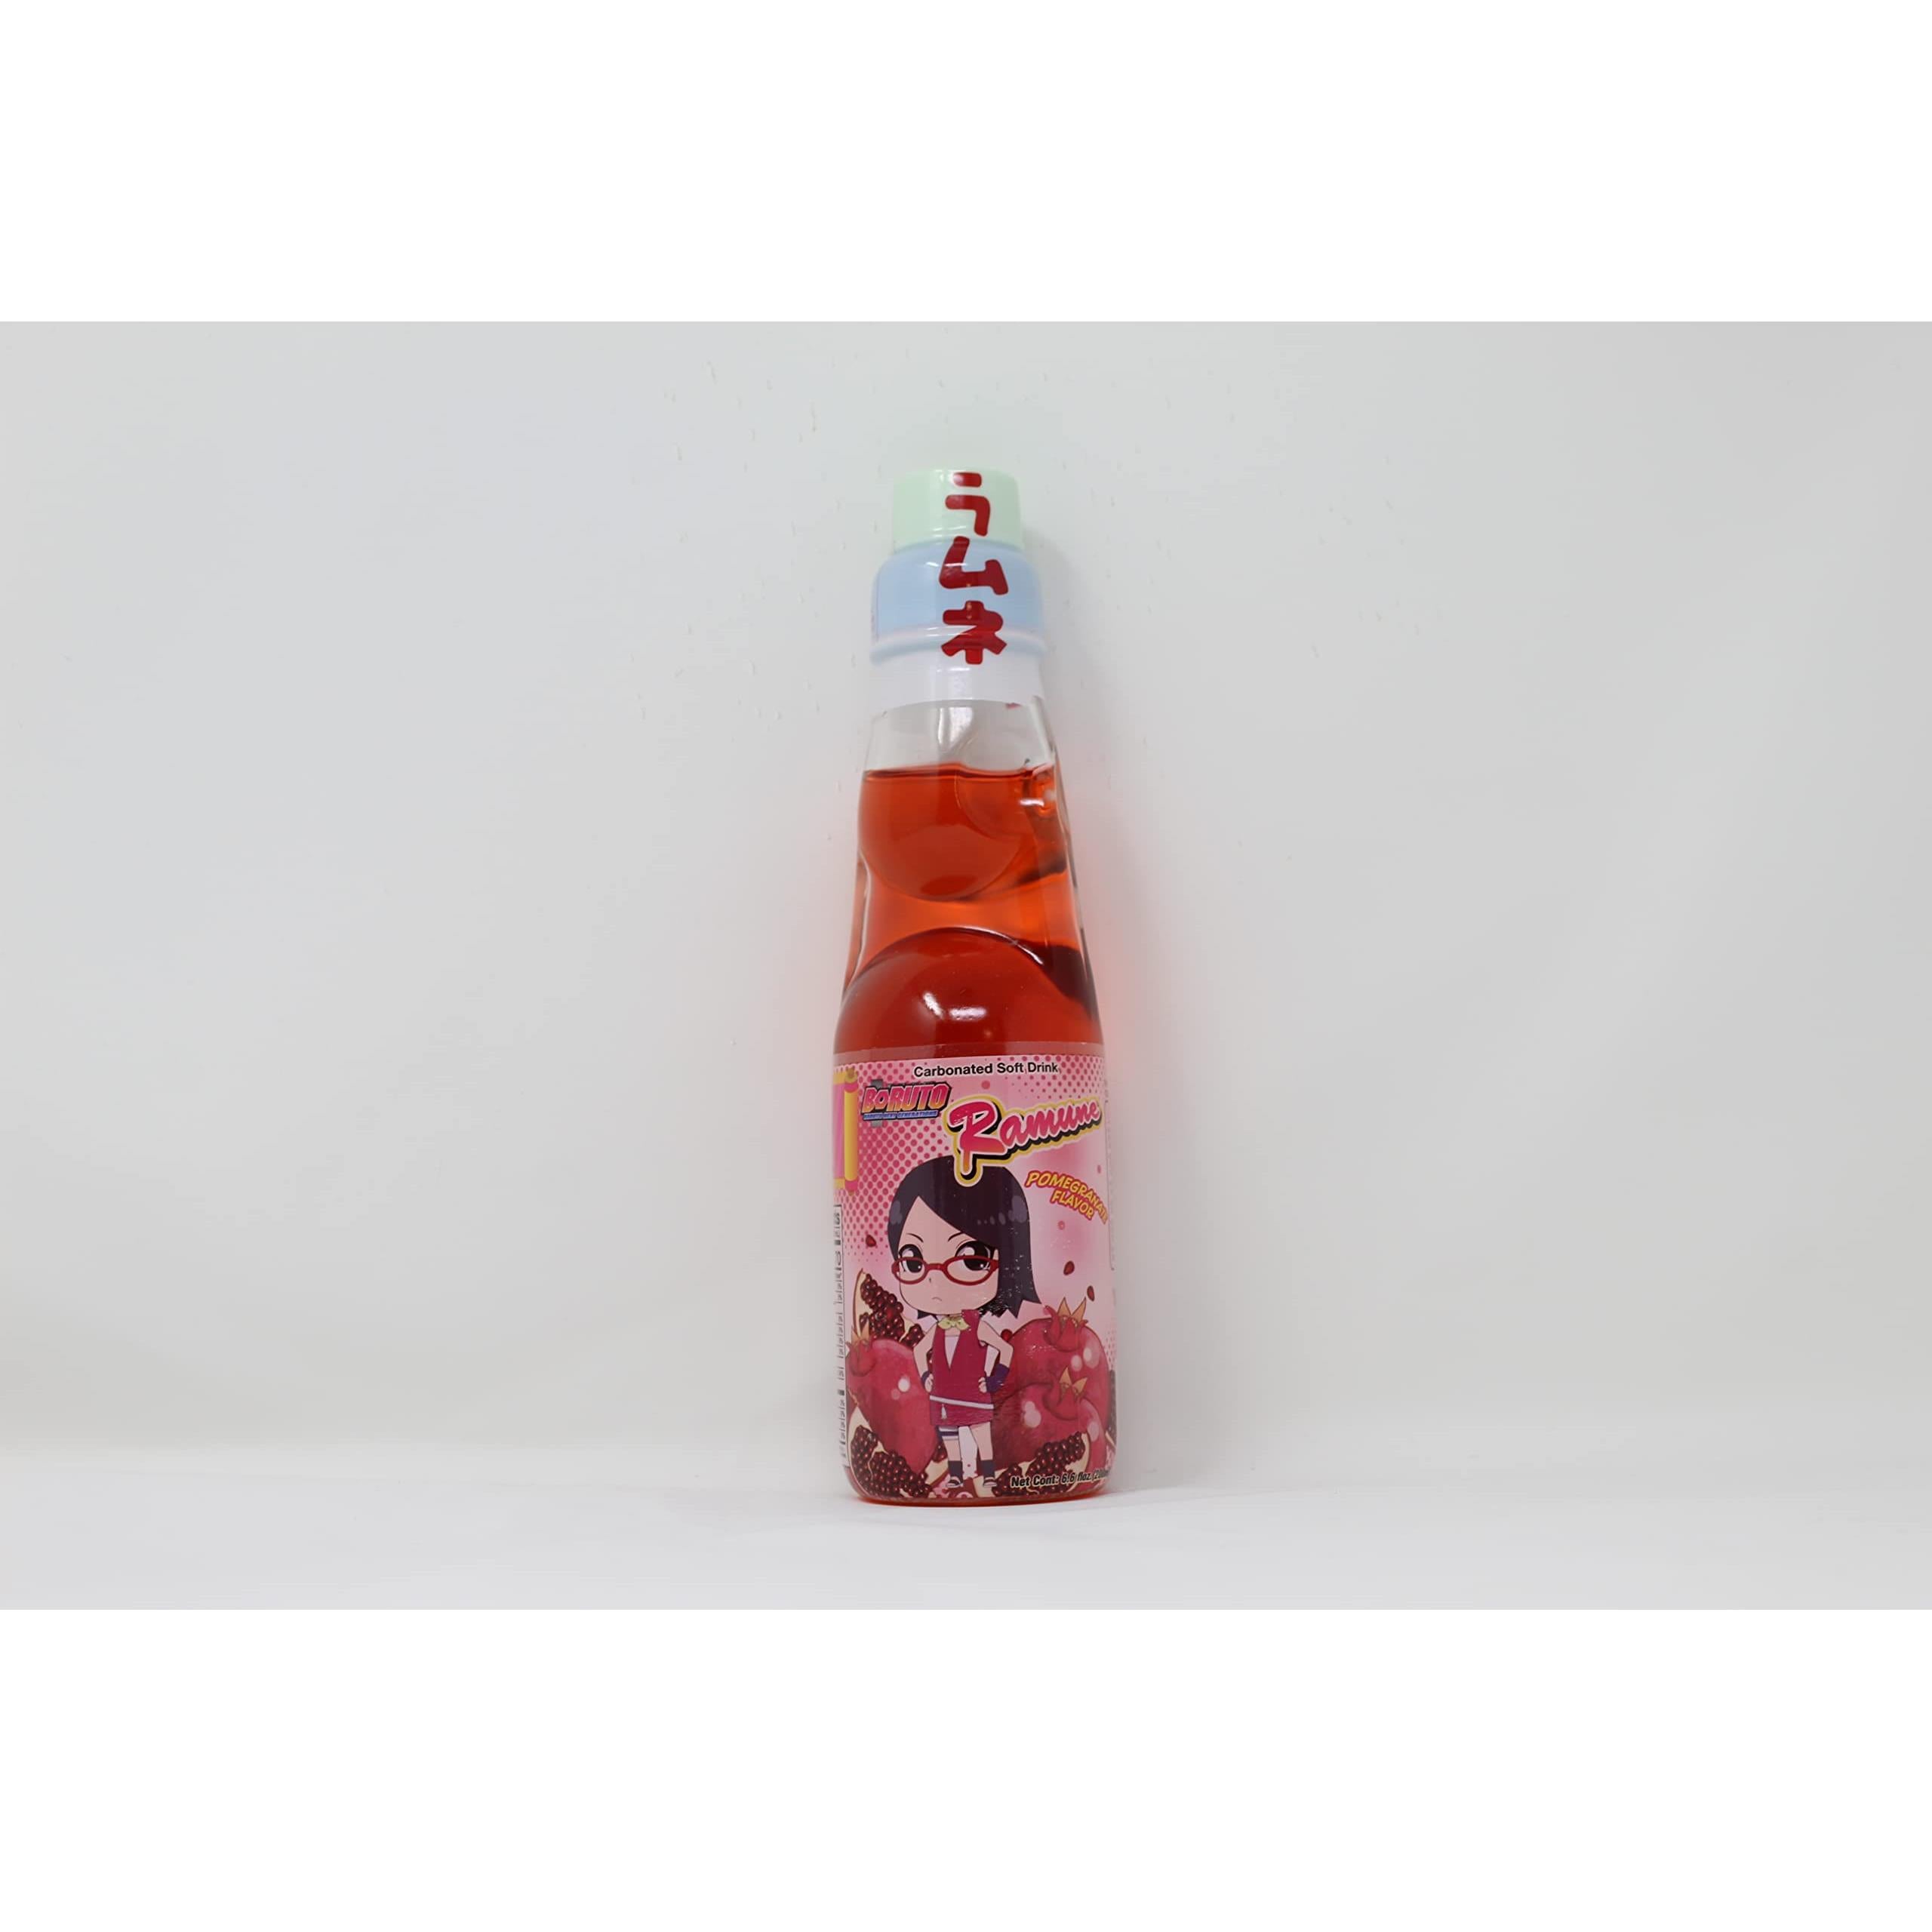 Naruto Shippuden & Boruto Theme Ramune Marble Drinks With Series Sticker (Sarada Pomegranate)